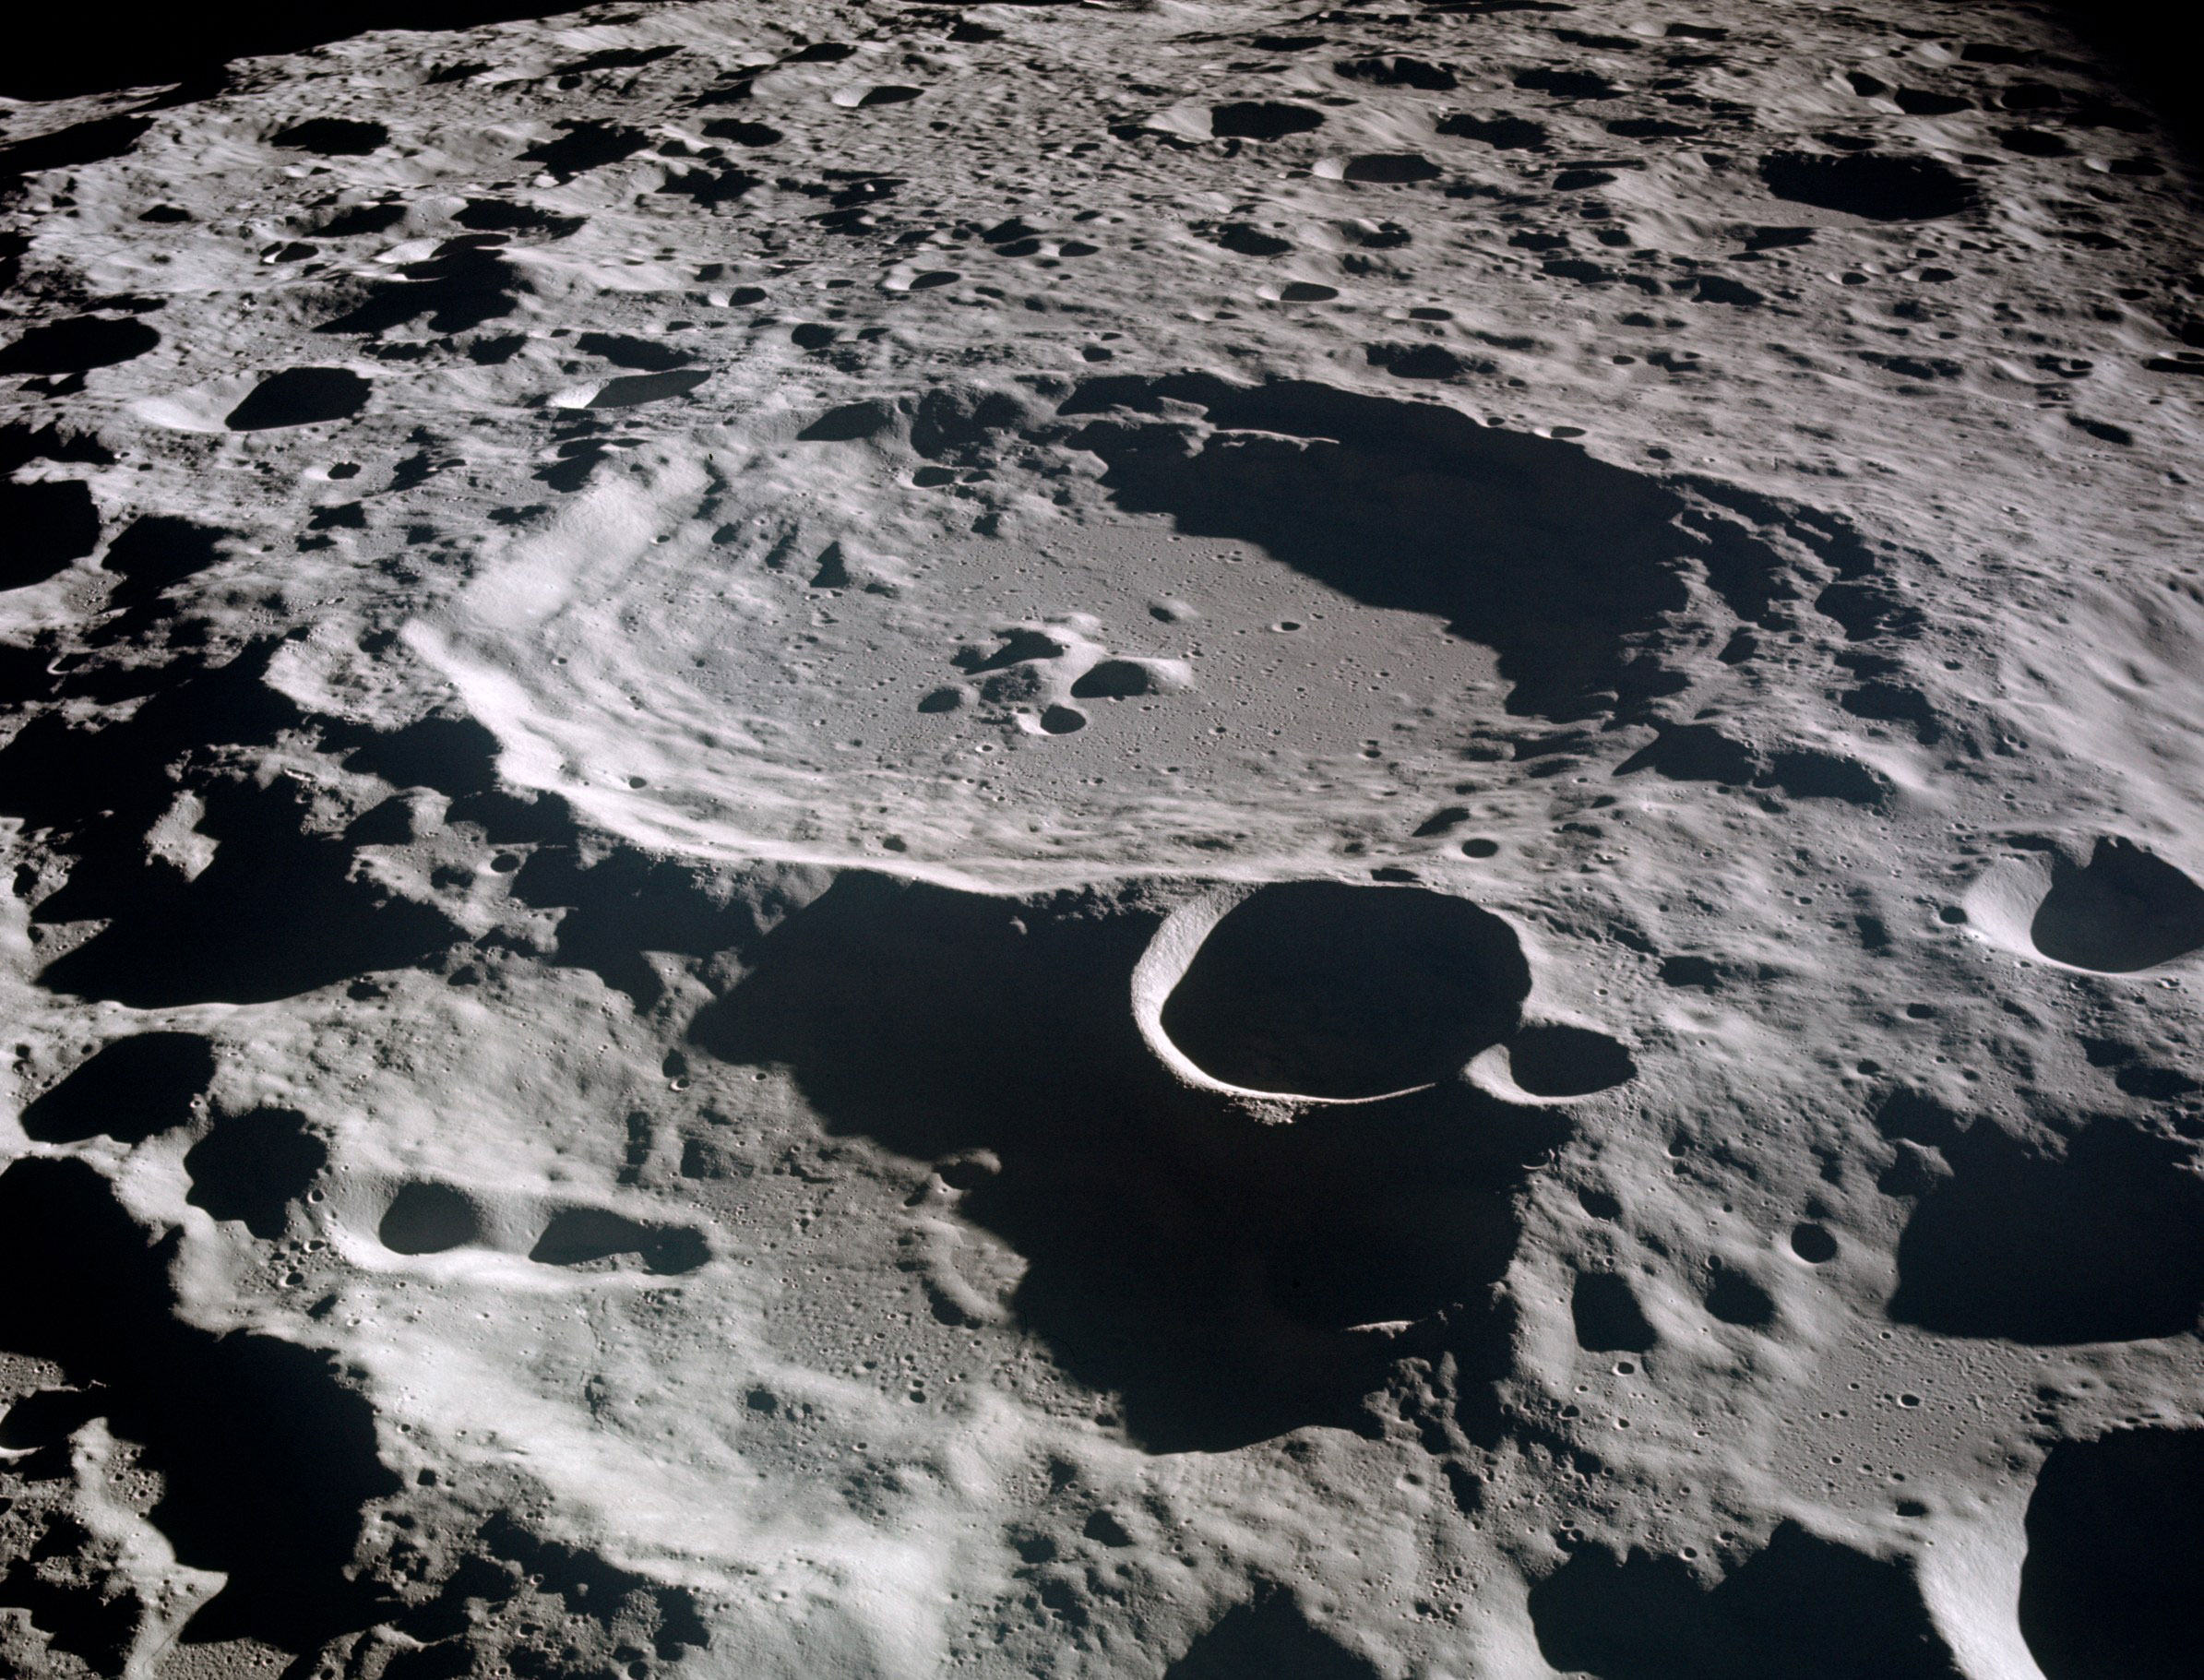 Большой кратер луны. Кратер Ван де Грааф. Кратер Циолковского. Кратер Терешковой на Луне. Луна Спутник земли кратеры.